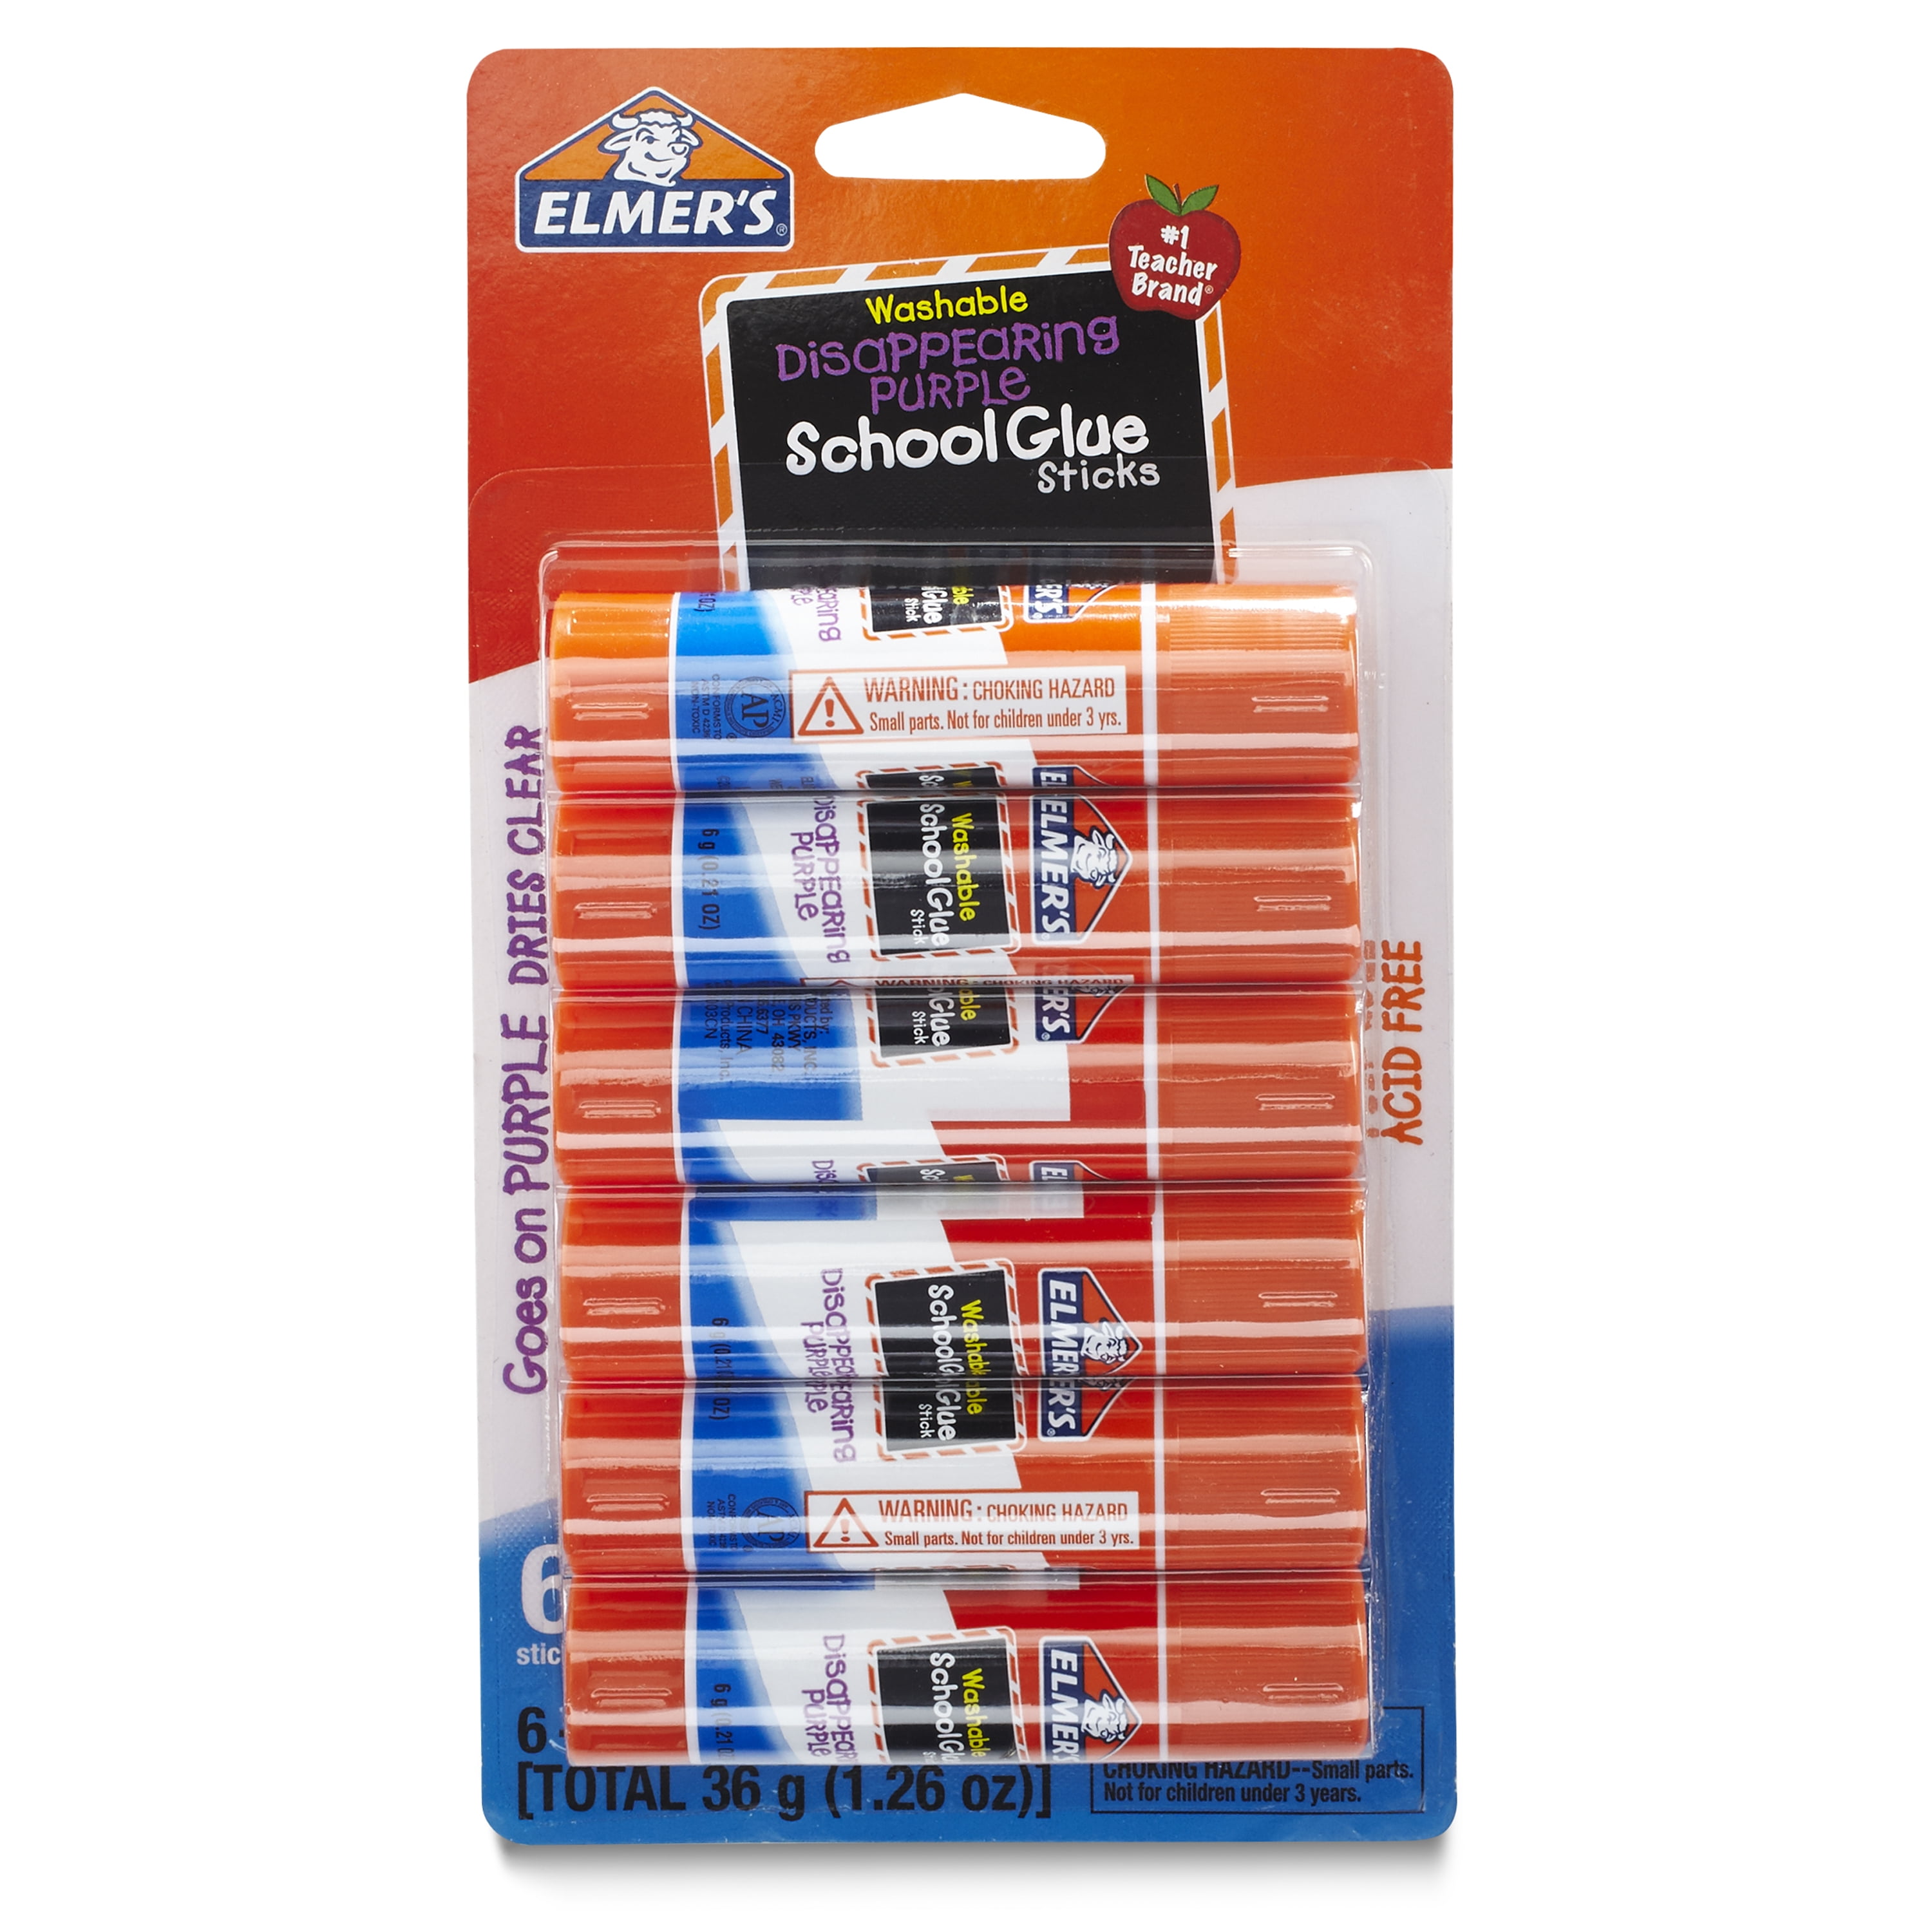 Elmer's® All Purpose Washable School Glue Sticks, 6 Packs of 4